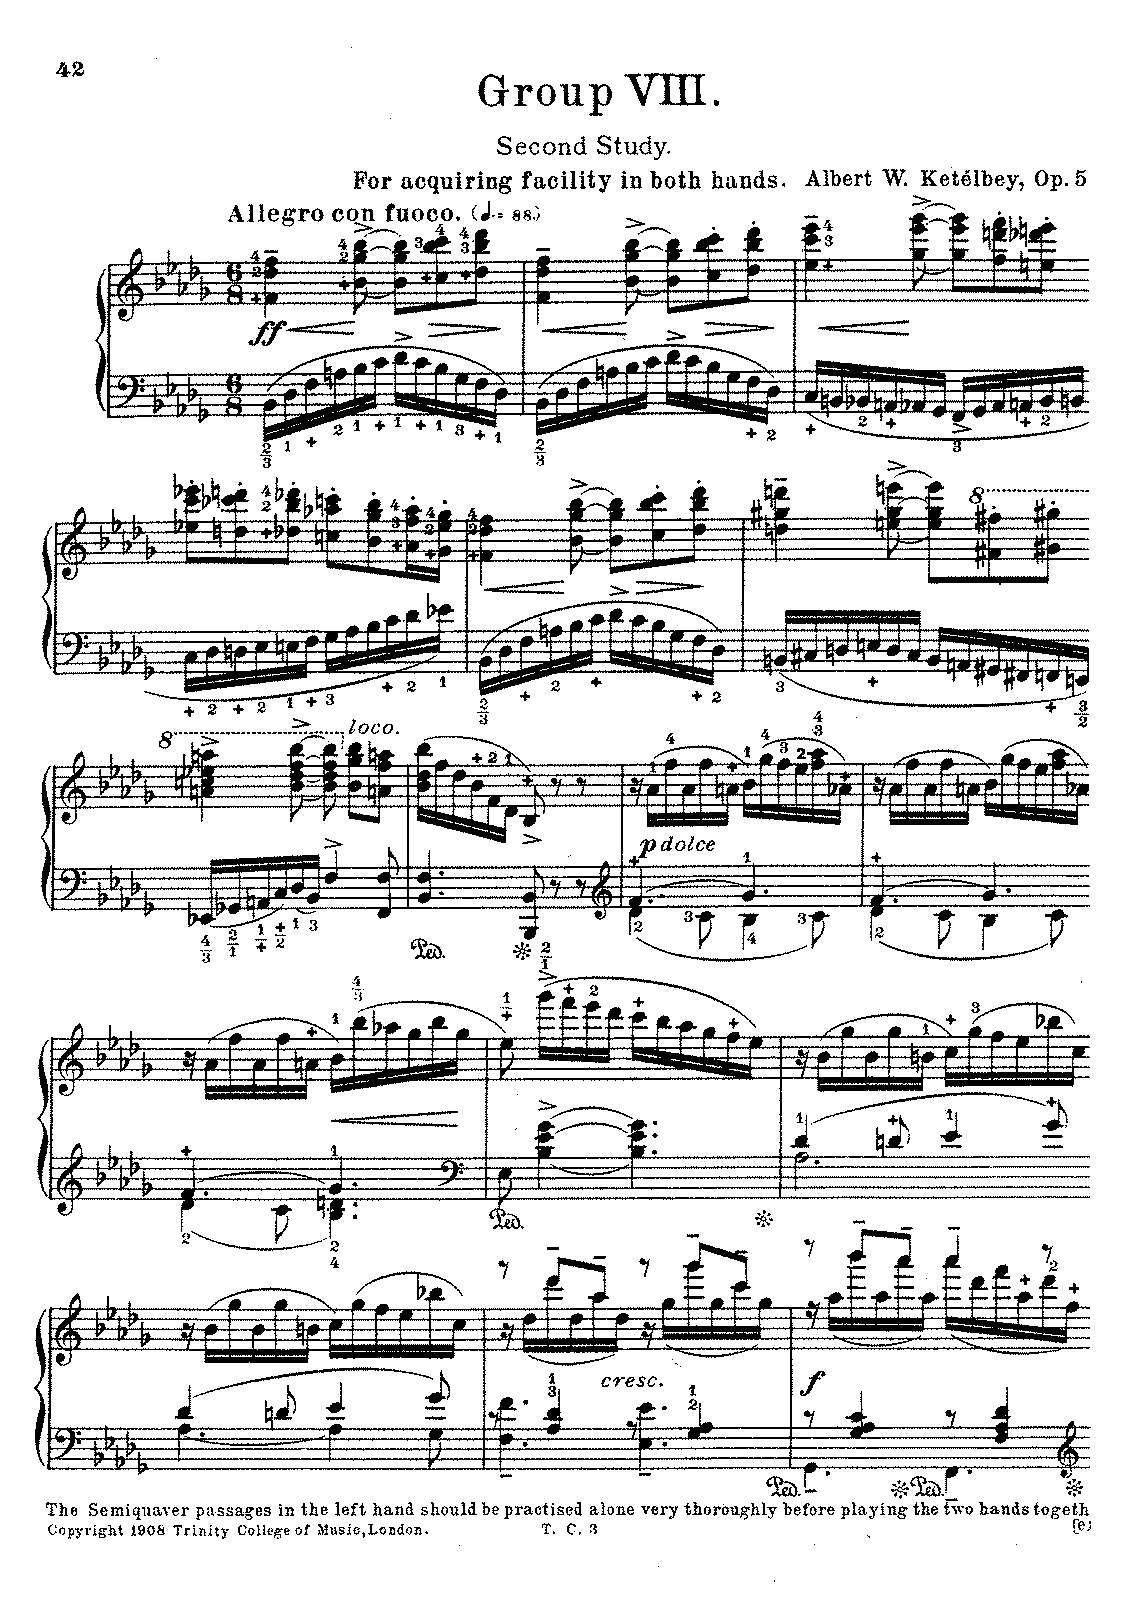 Study, Op.5 (Ketèlbey, Albert William) - IMSLP